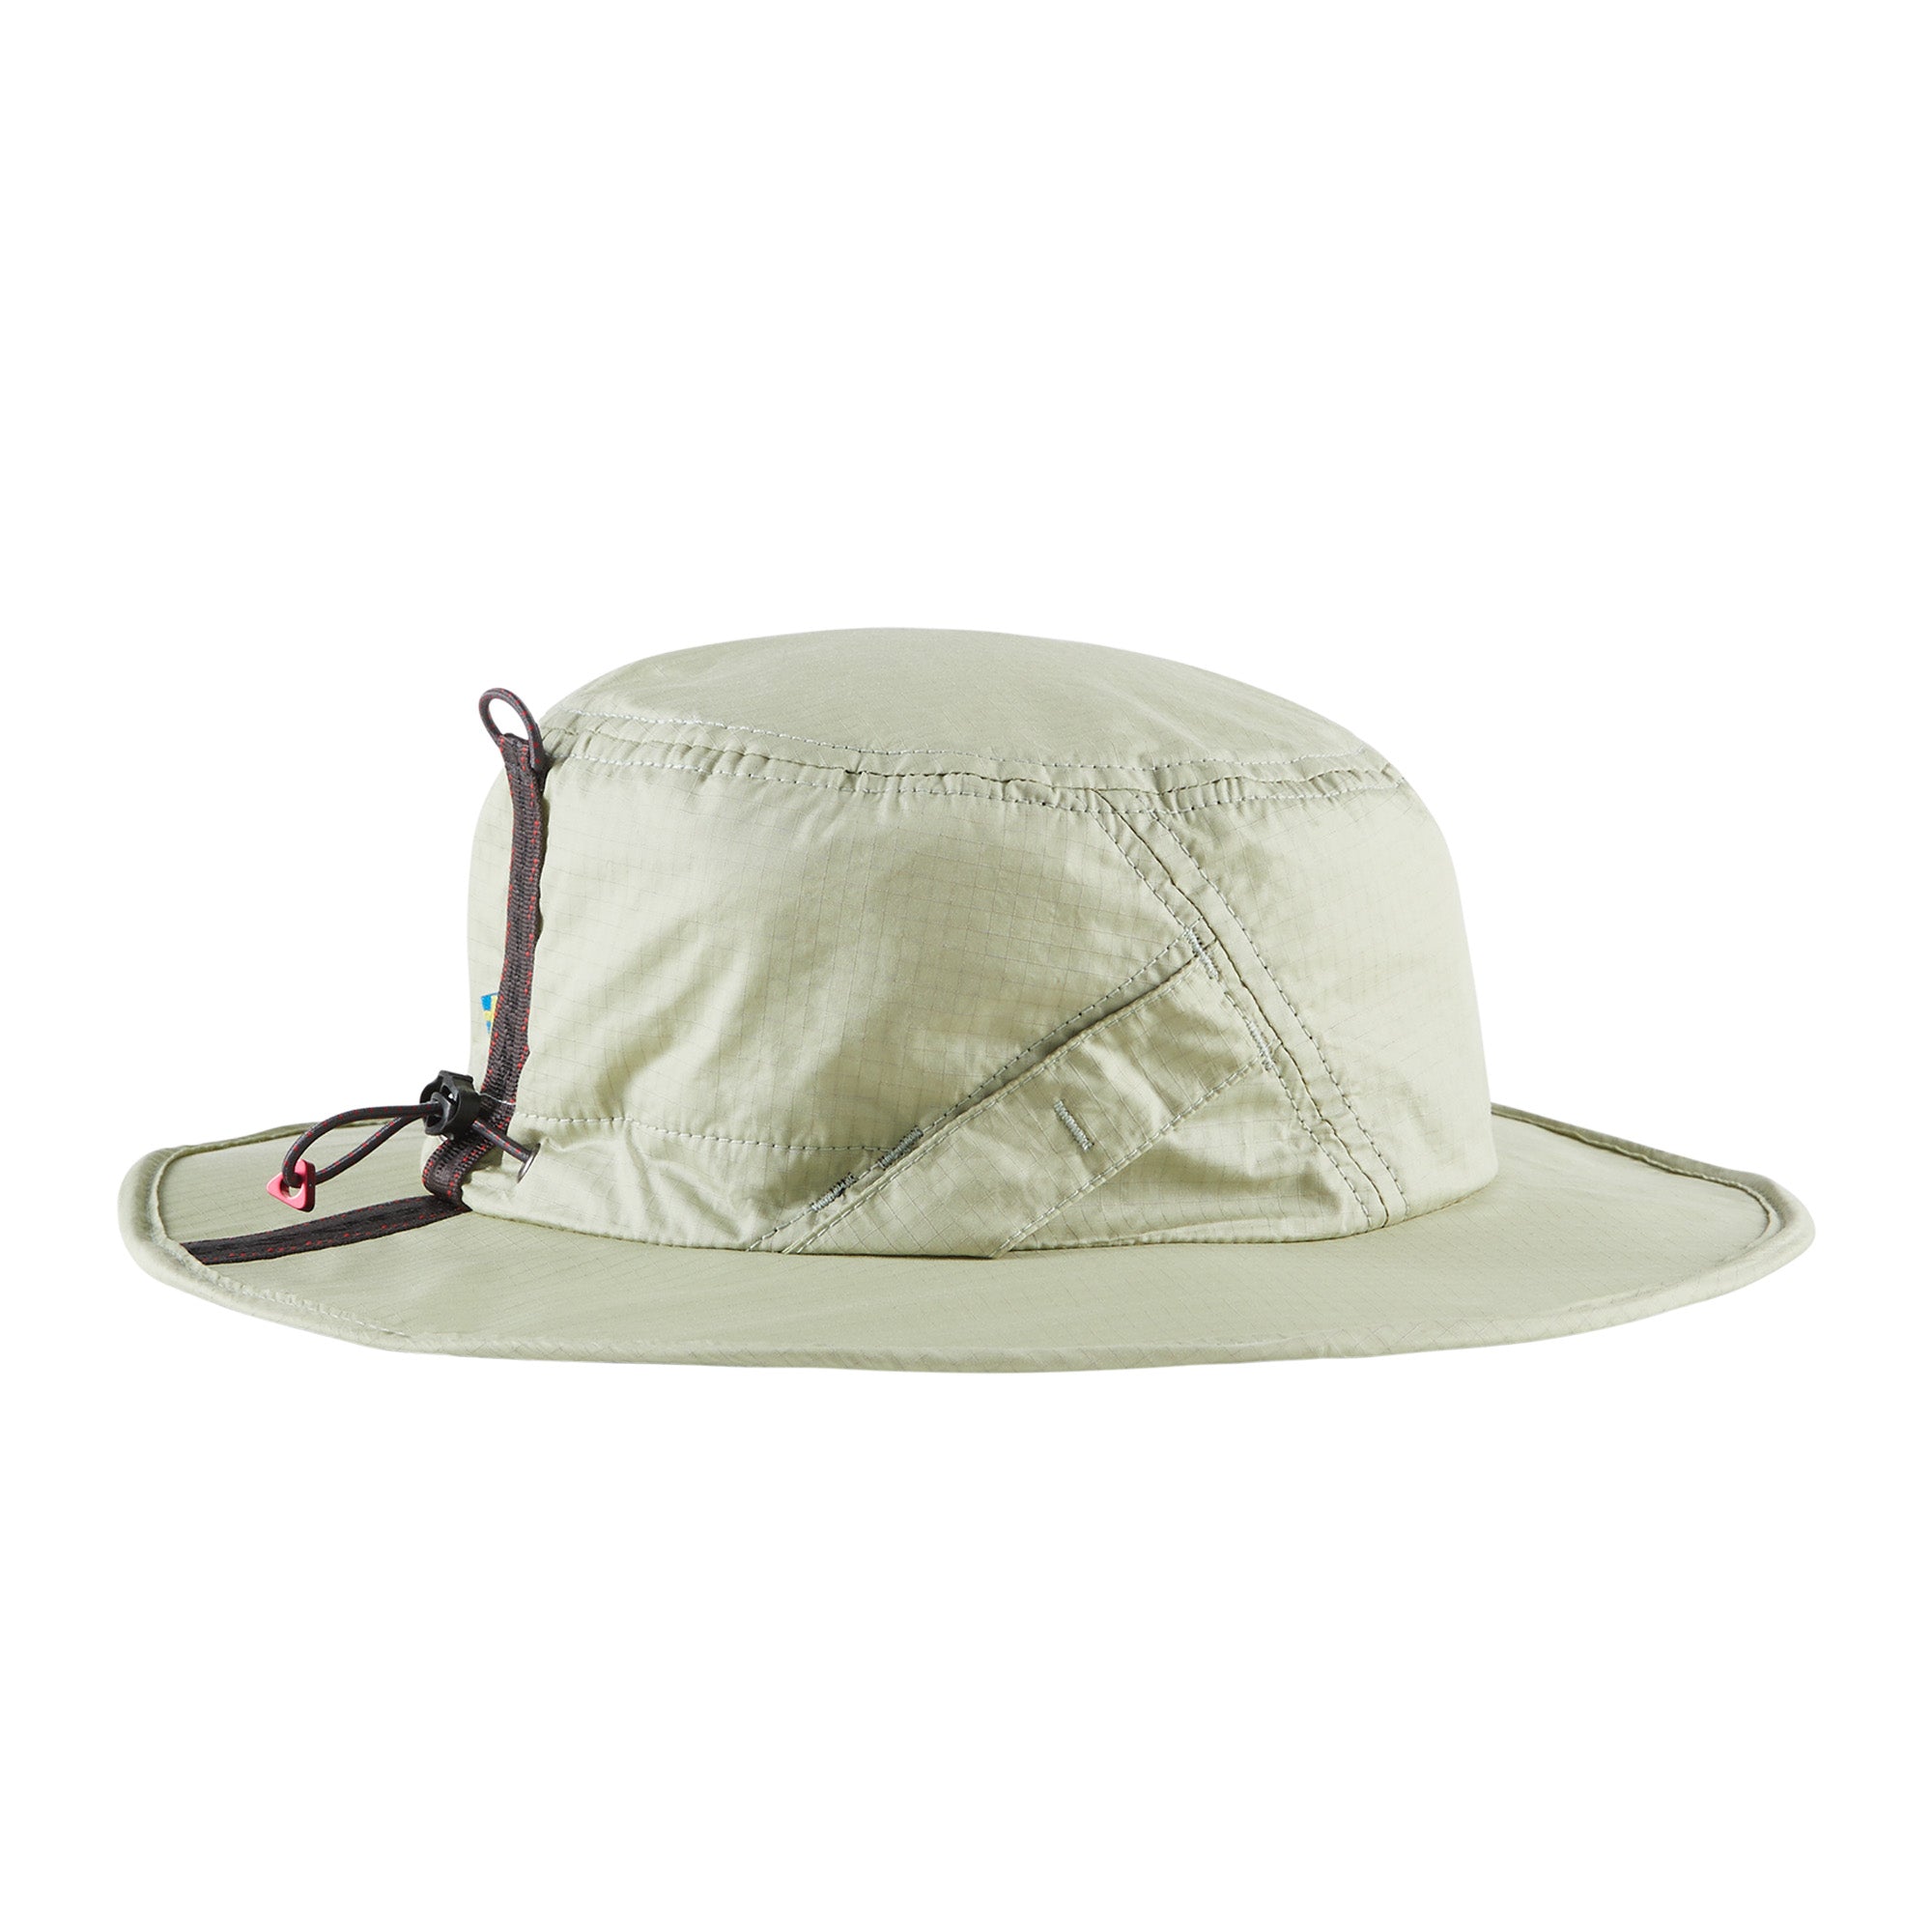 Ansur Hiking Hat